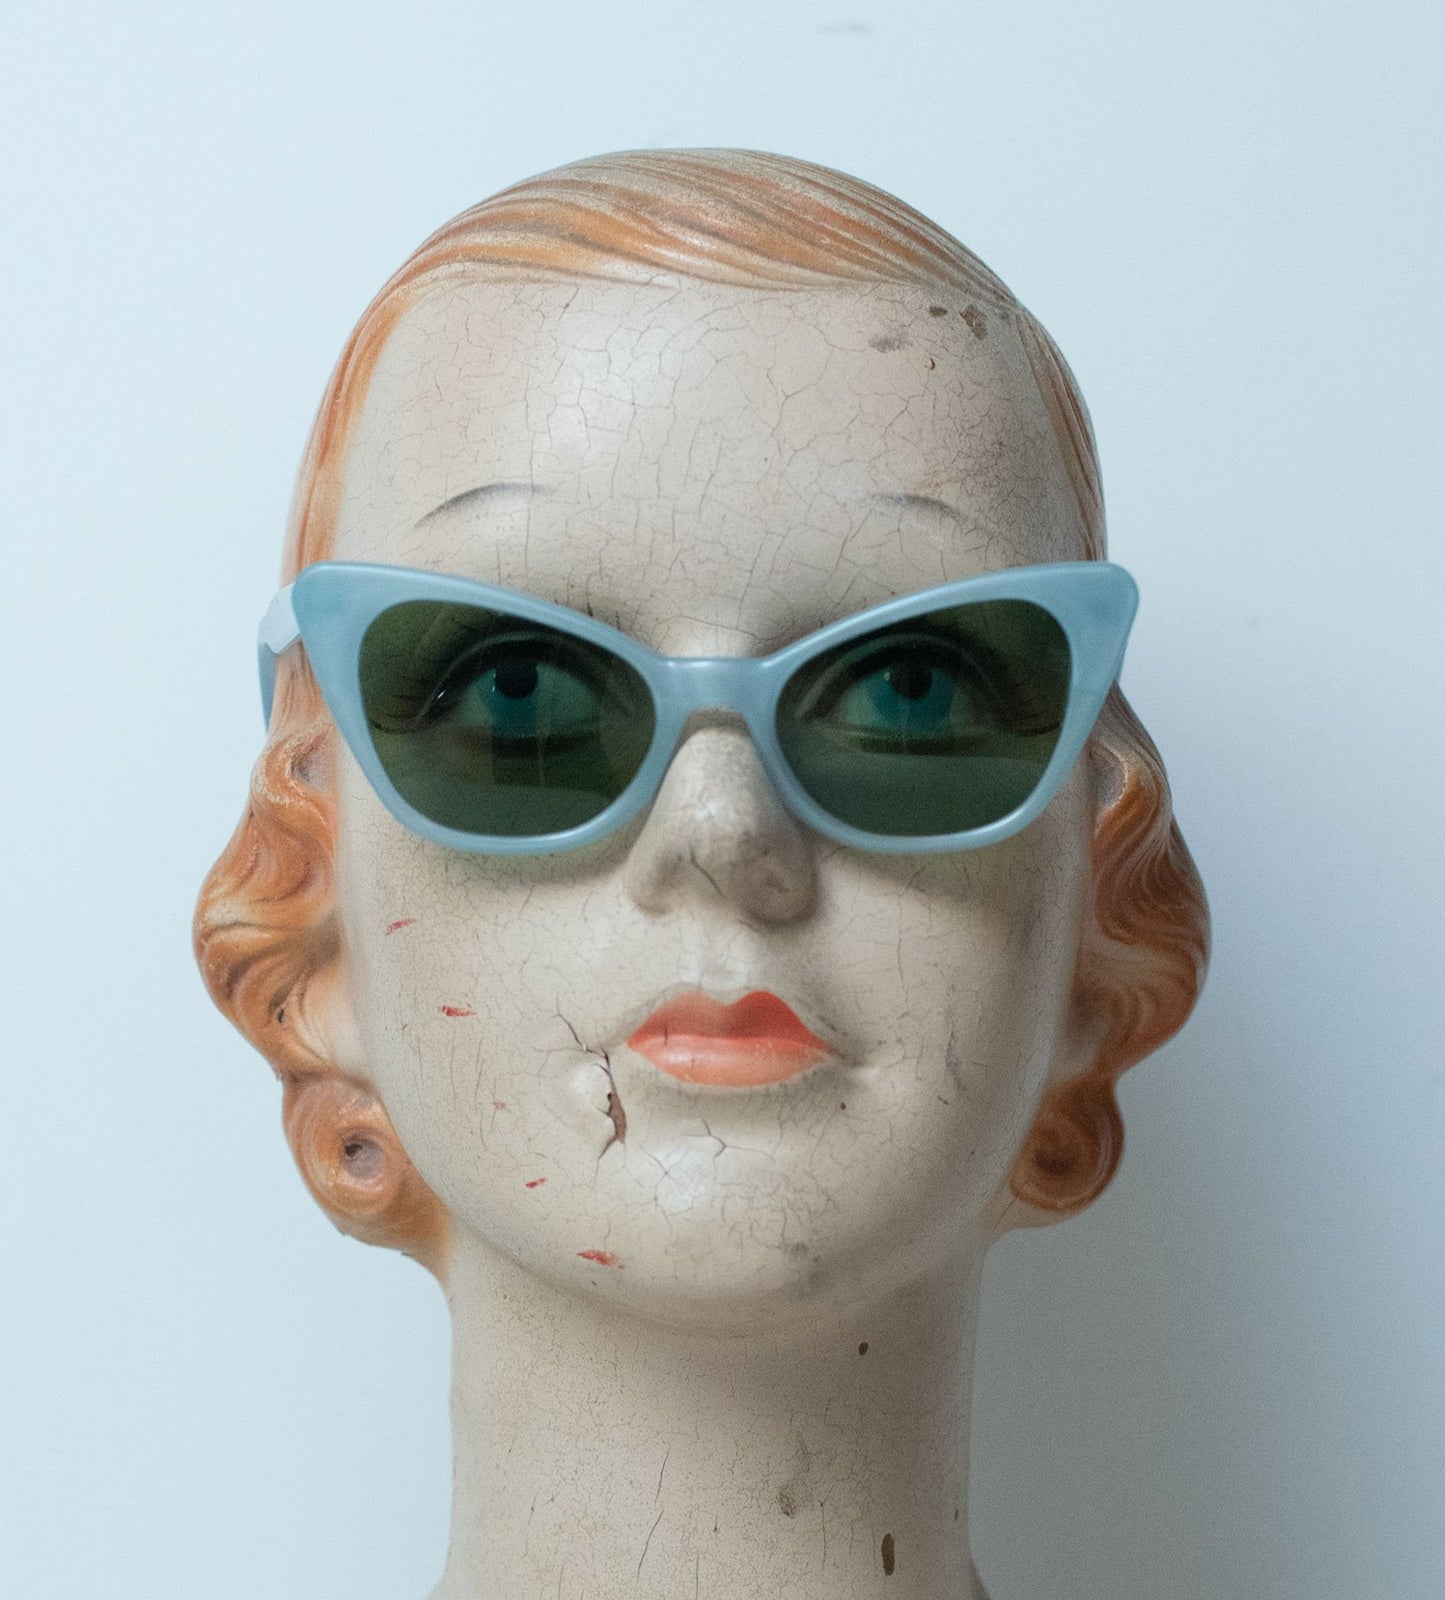 1950s Pale Blue Cat Eye Sunglasses